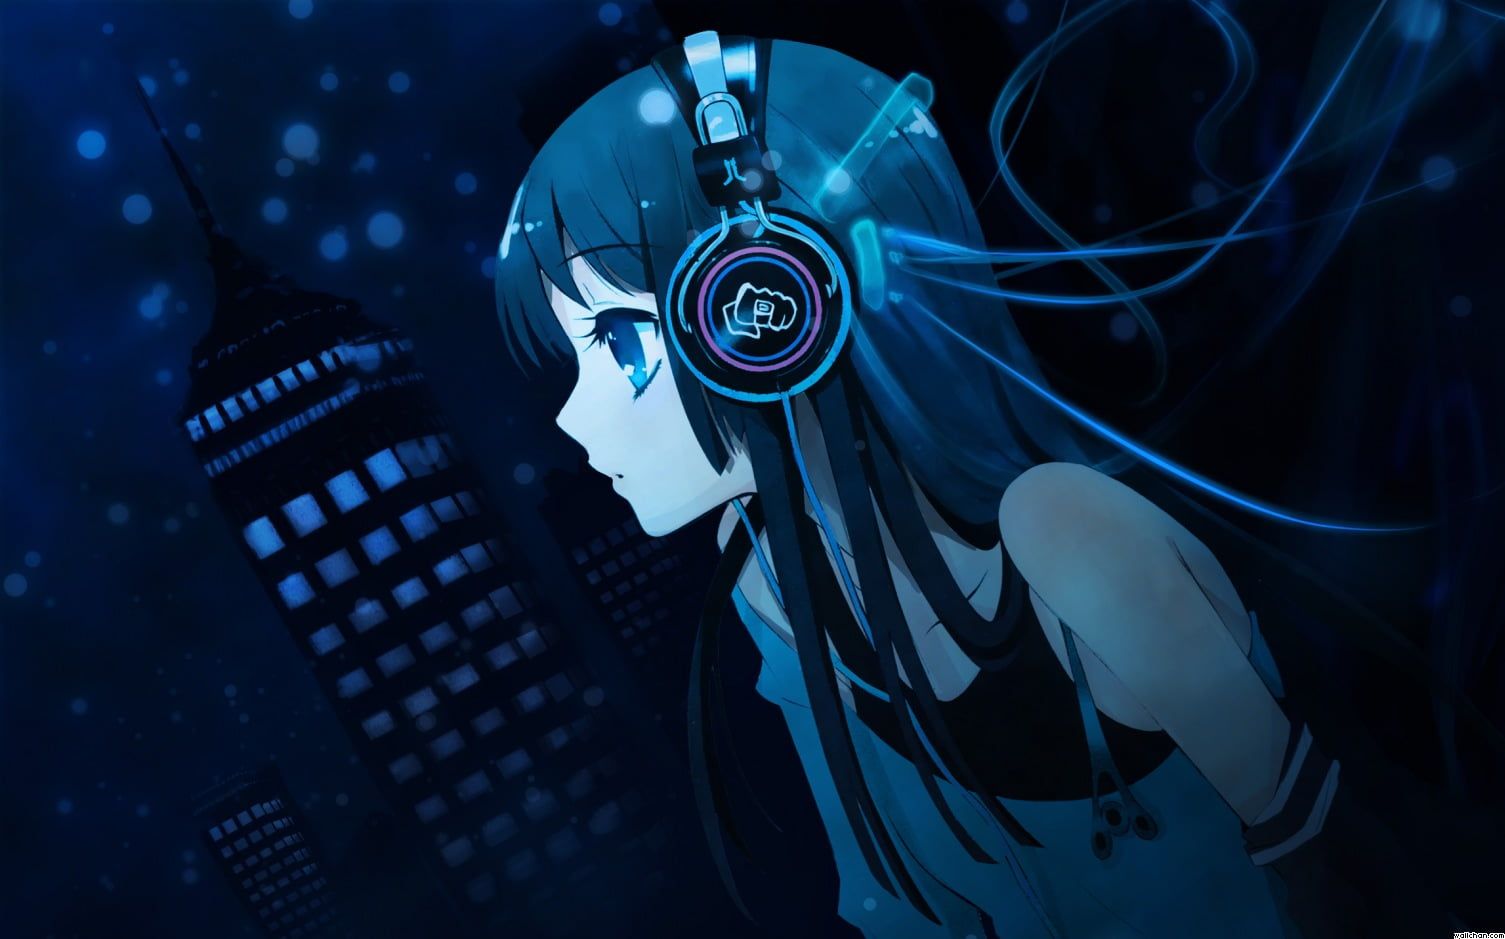 HD Wallpaper: Anime, Anime Girls, Headphones, Technology, No People, Close Up. Anime, Papel De Parede Anime, Personagens De Anime